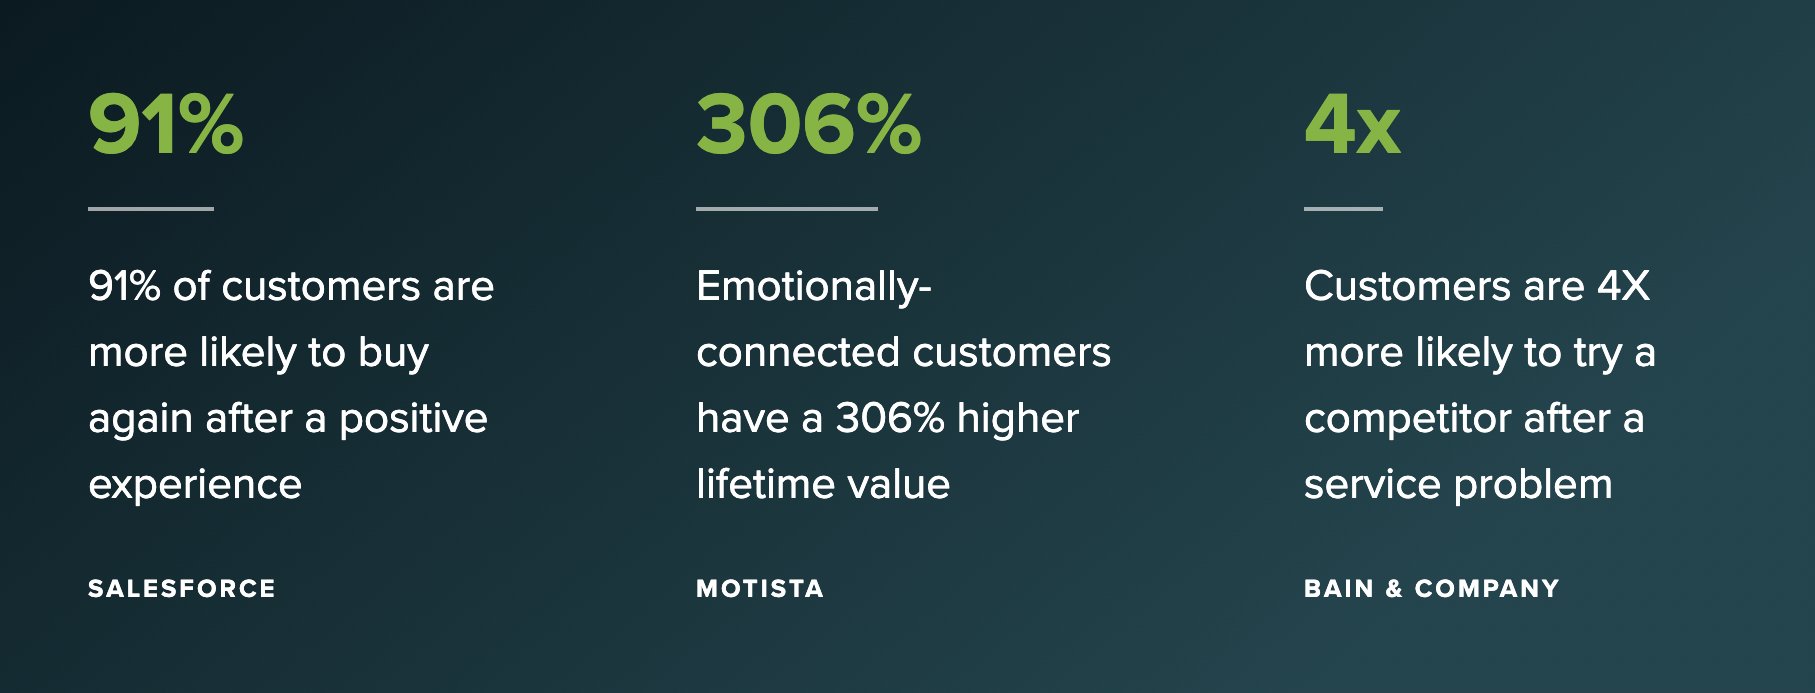 digital customer experience statistics